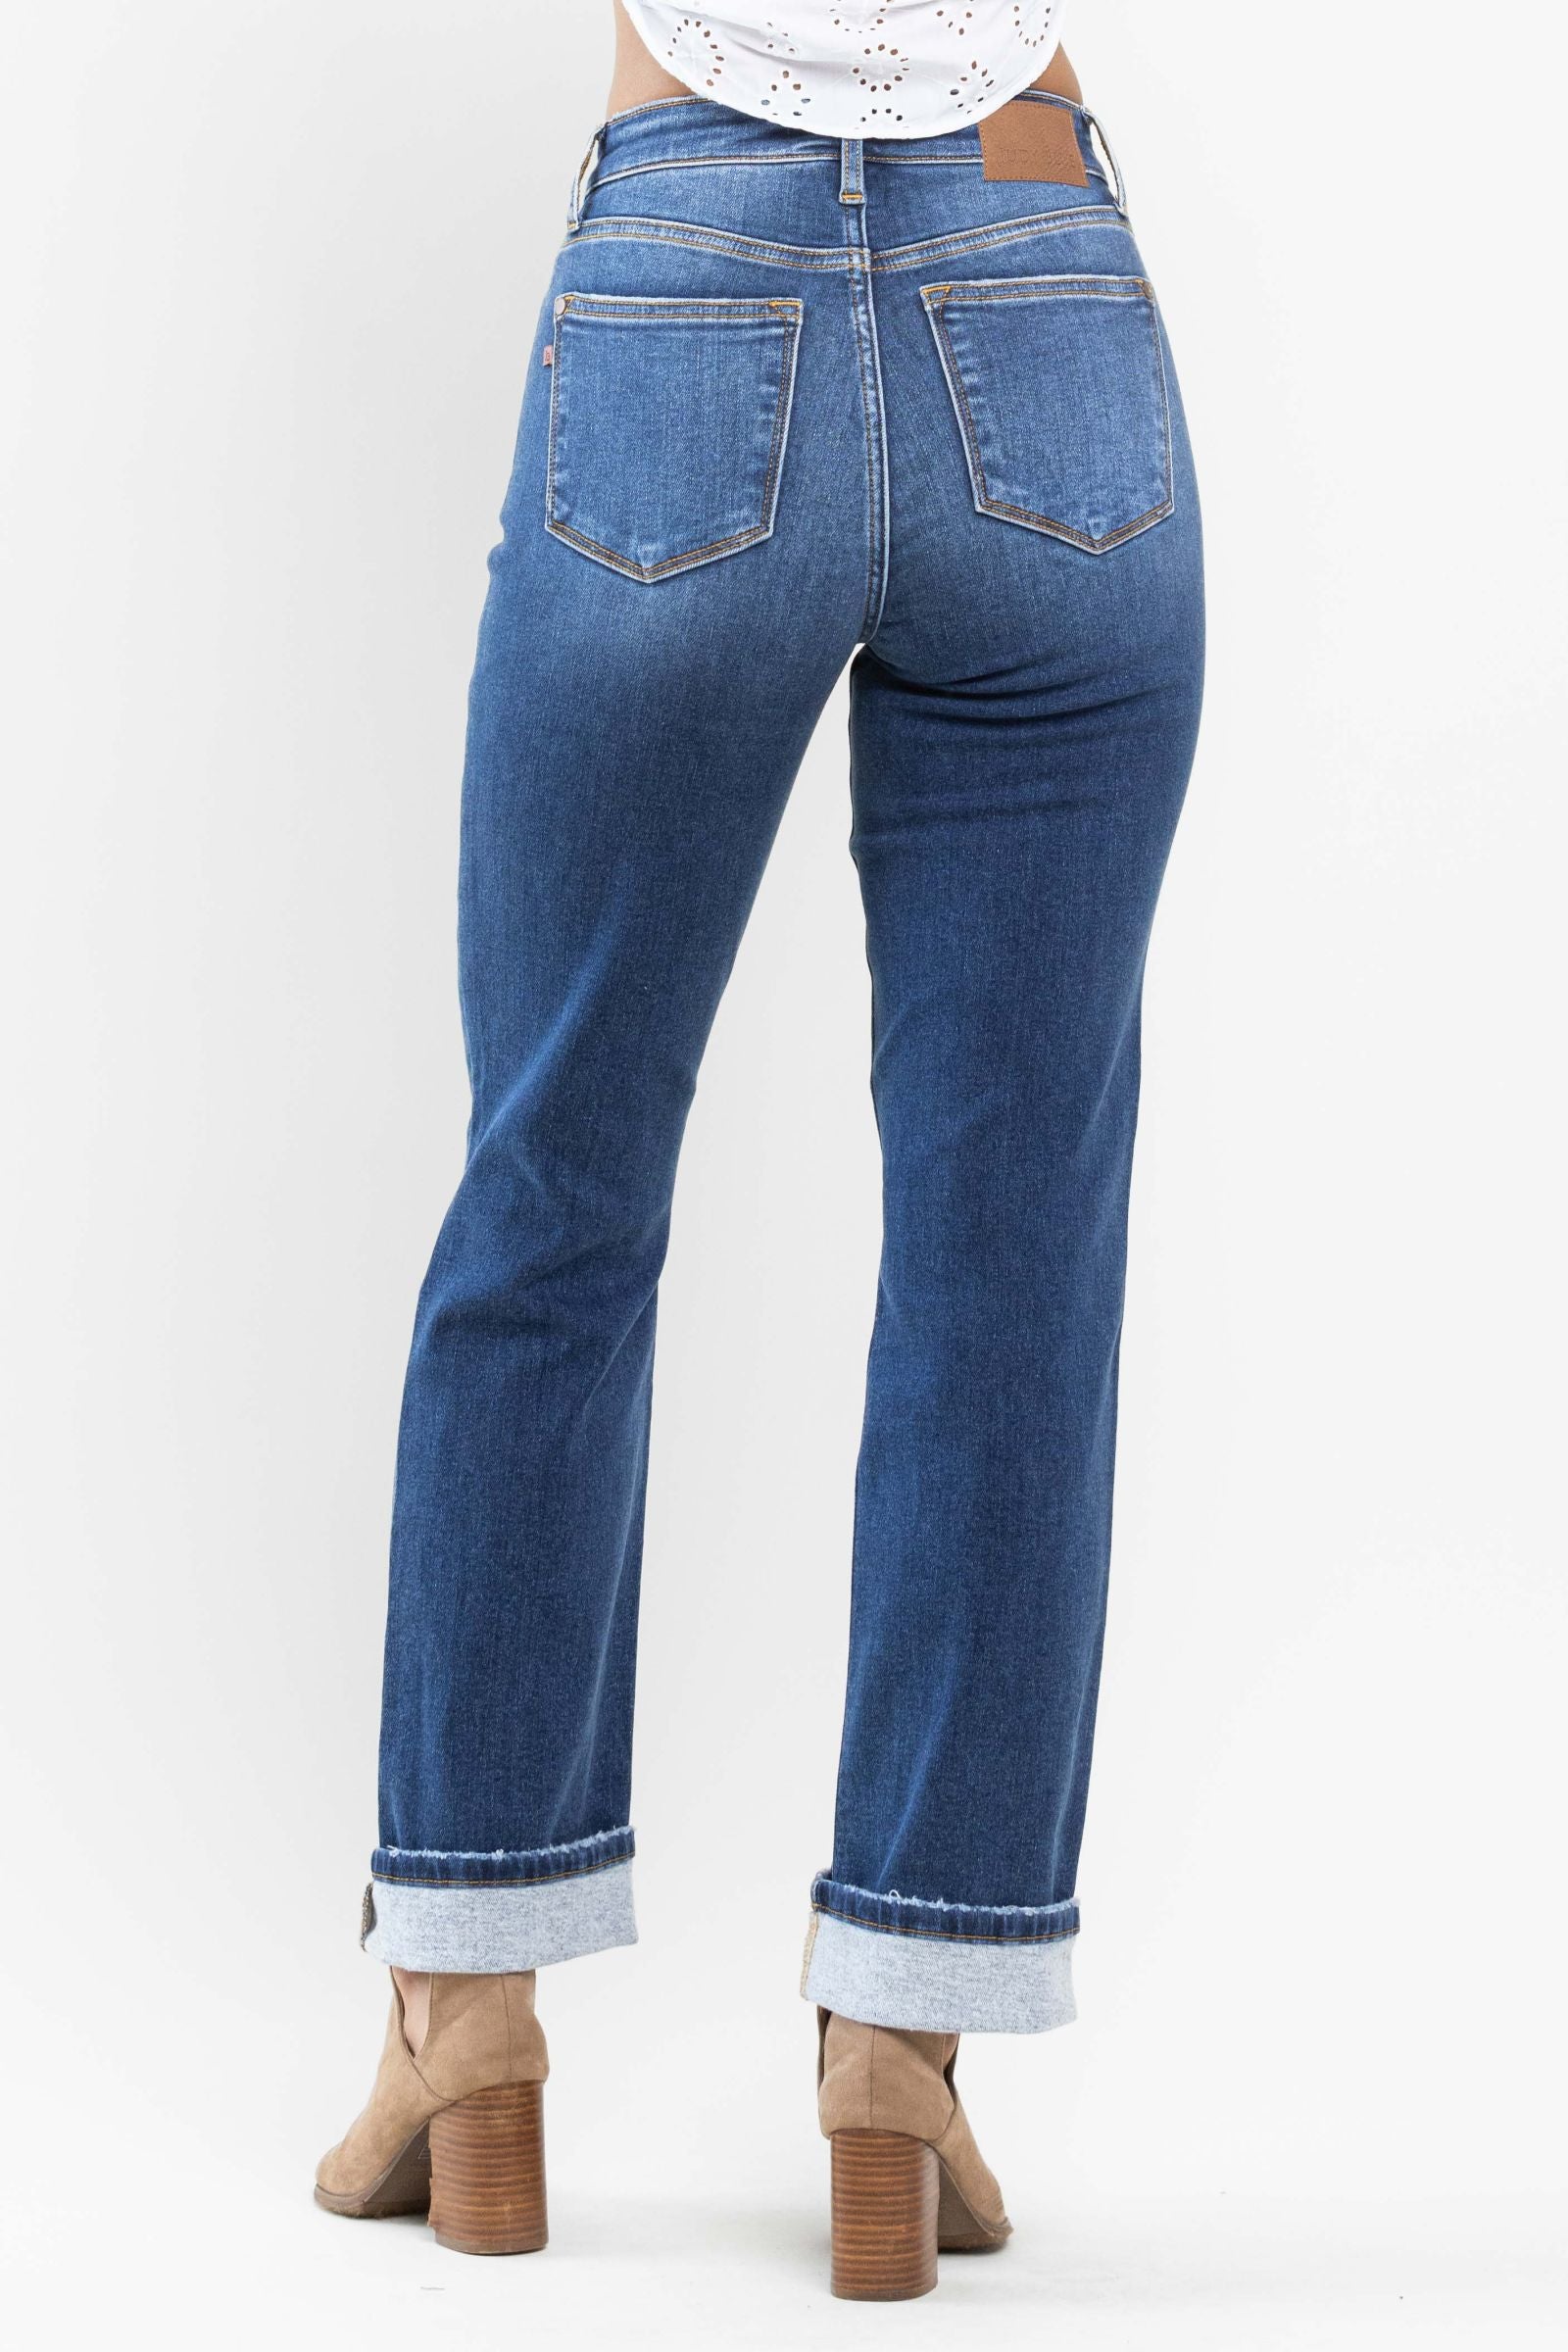 *PVM* Judy Blue Contrast Thermal Straight Leg Jeans (Dark Wash)